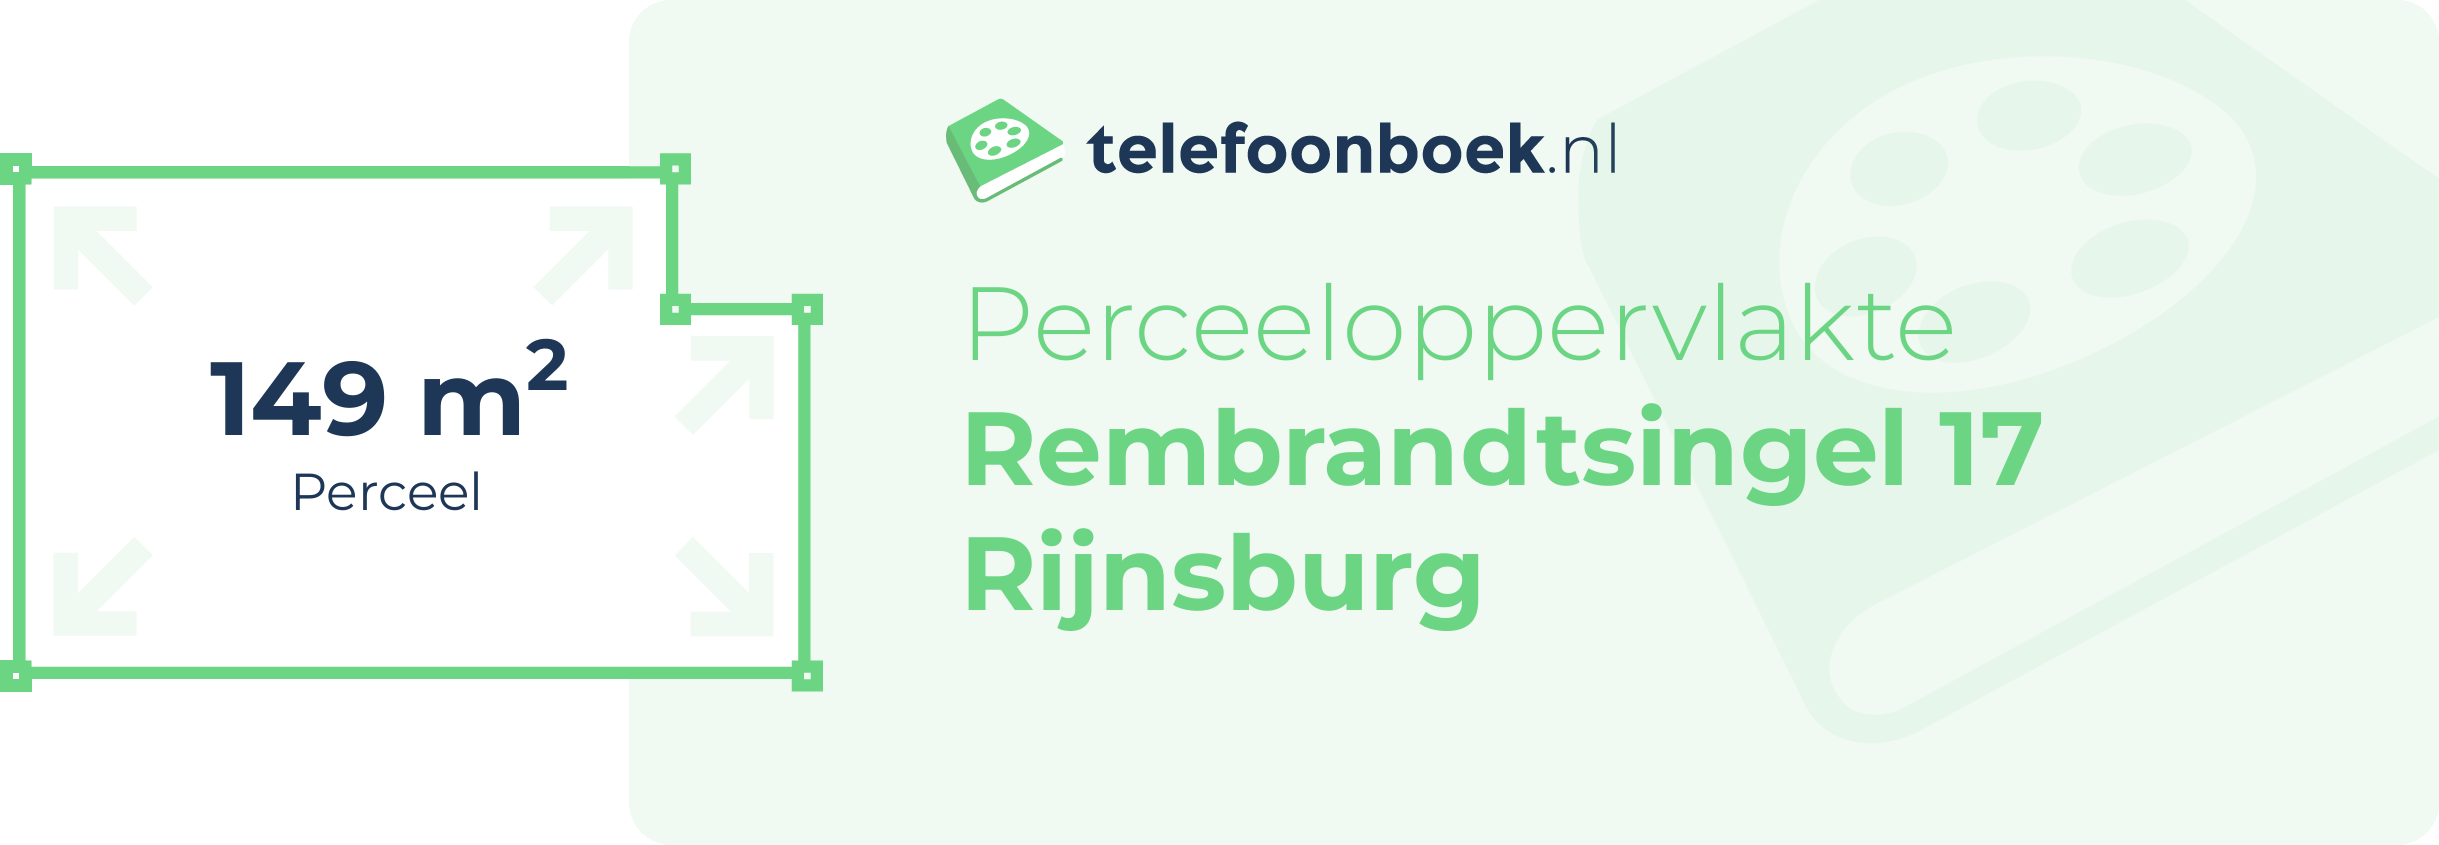 Perceeloppervlakte Rembrandtsingel 17 Rijnsburg